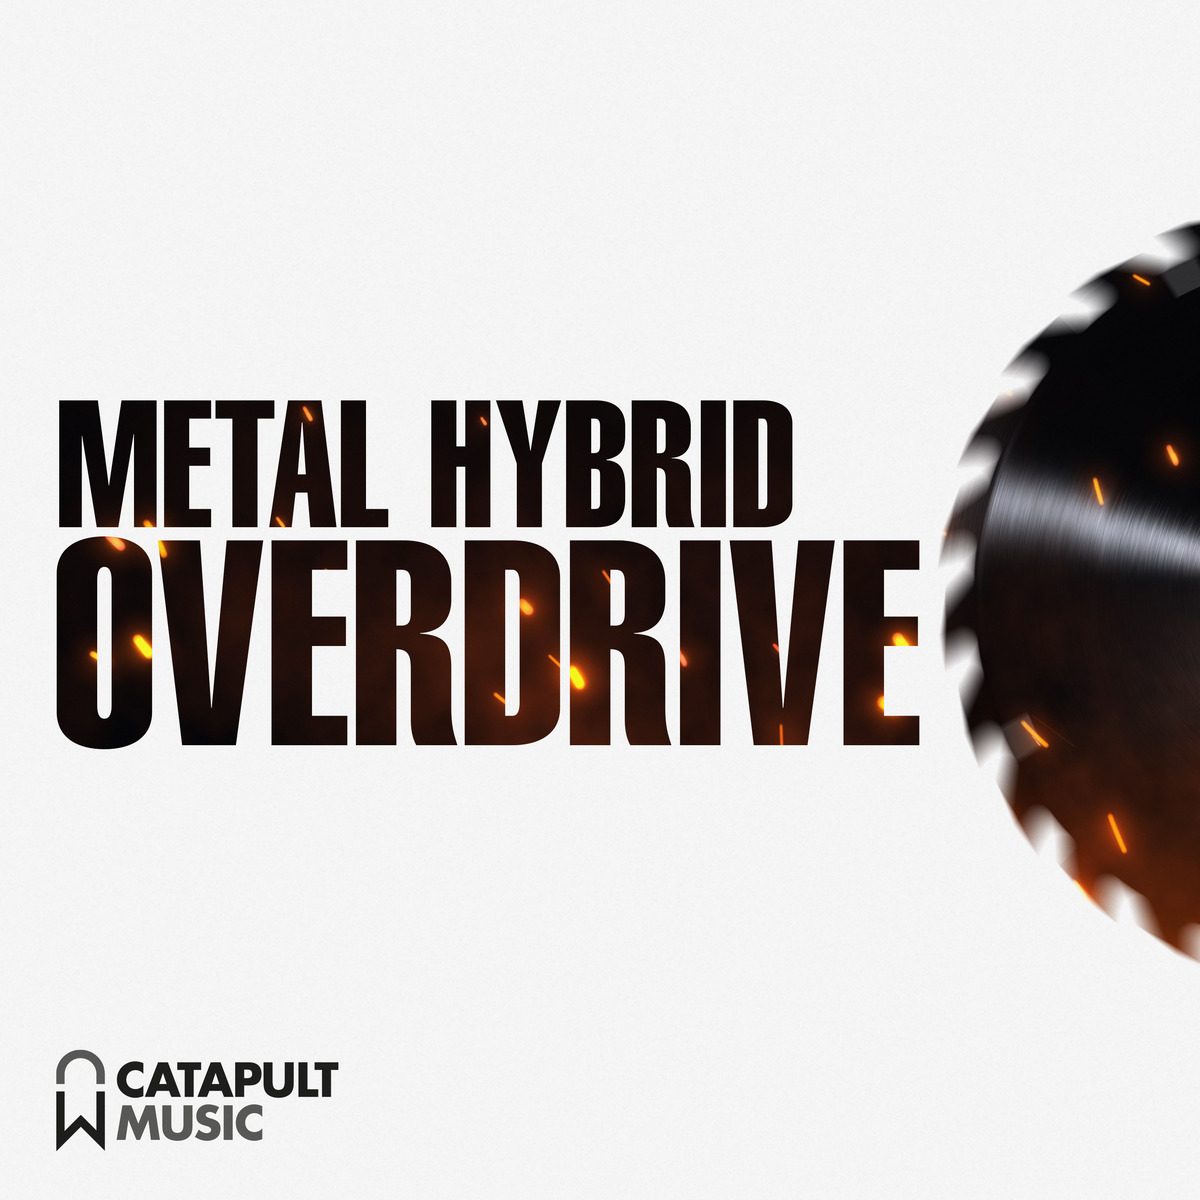 Metal Hybrid Overdrive